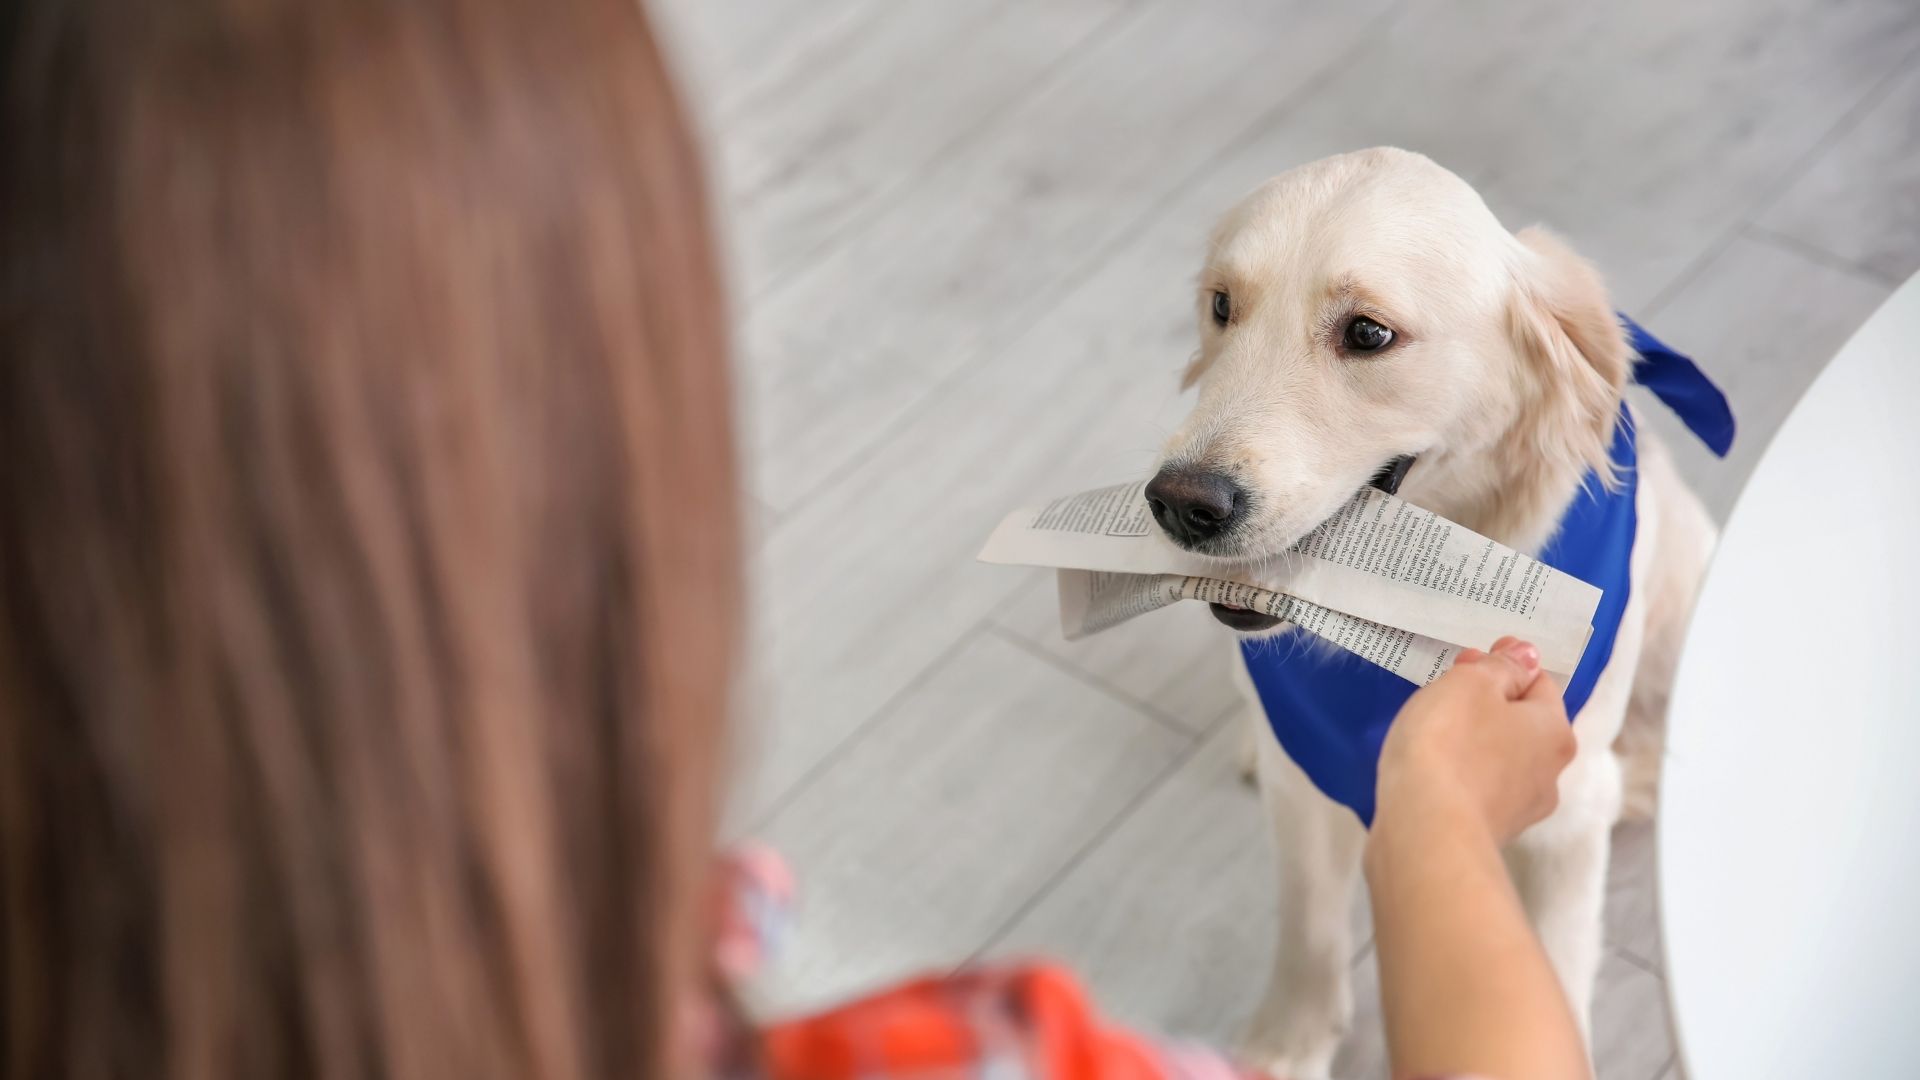 The Ability Center Hosts Assistance Dogs Graduation